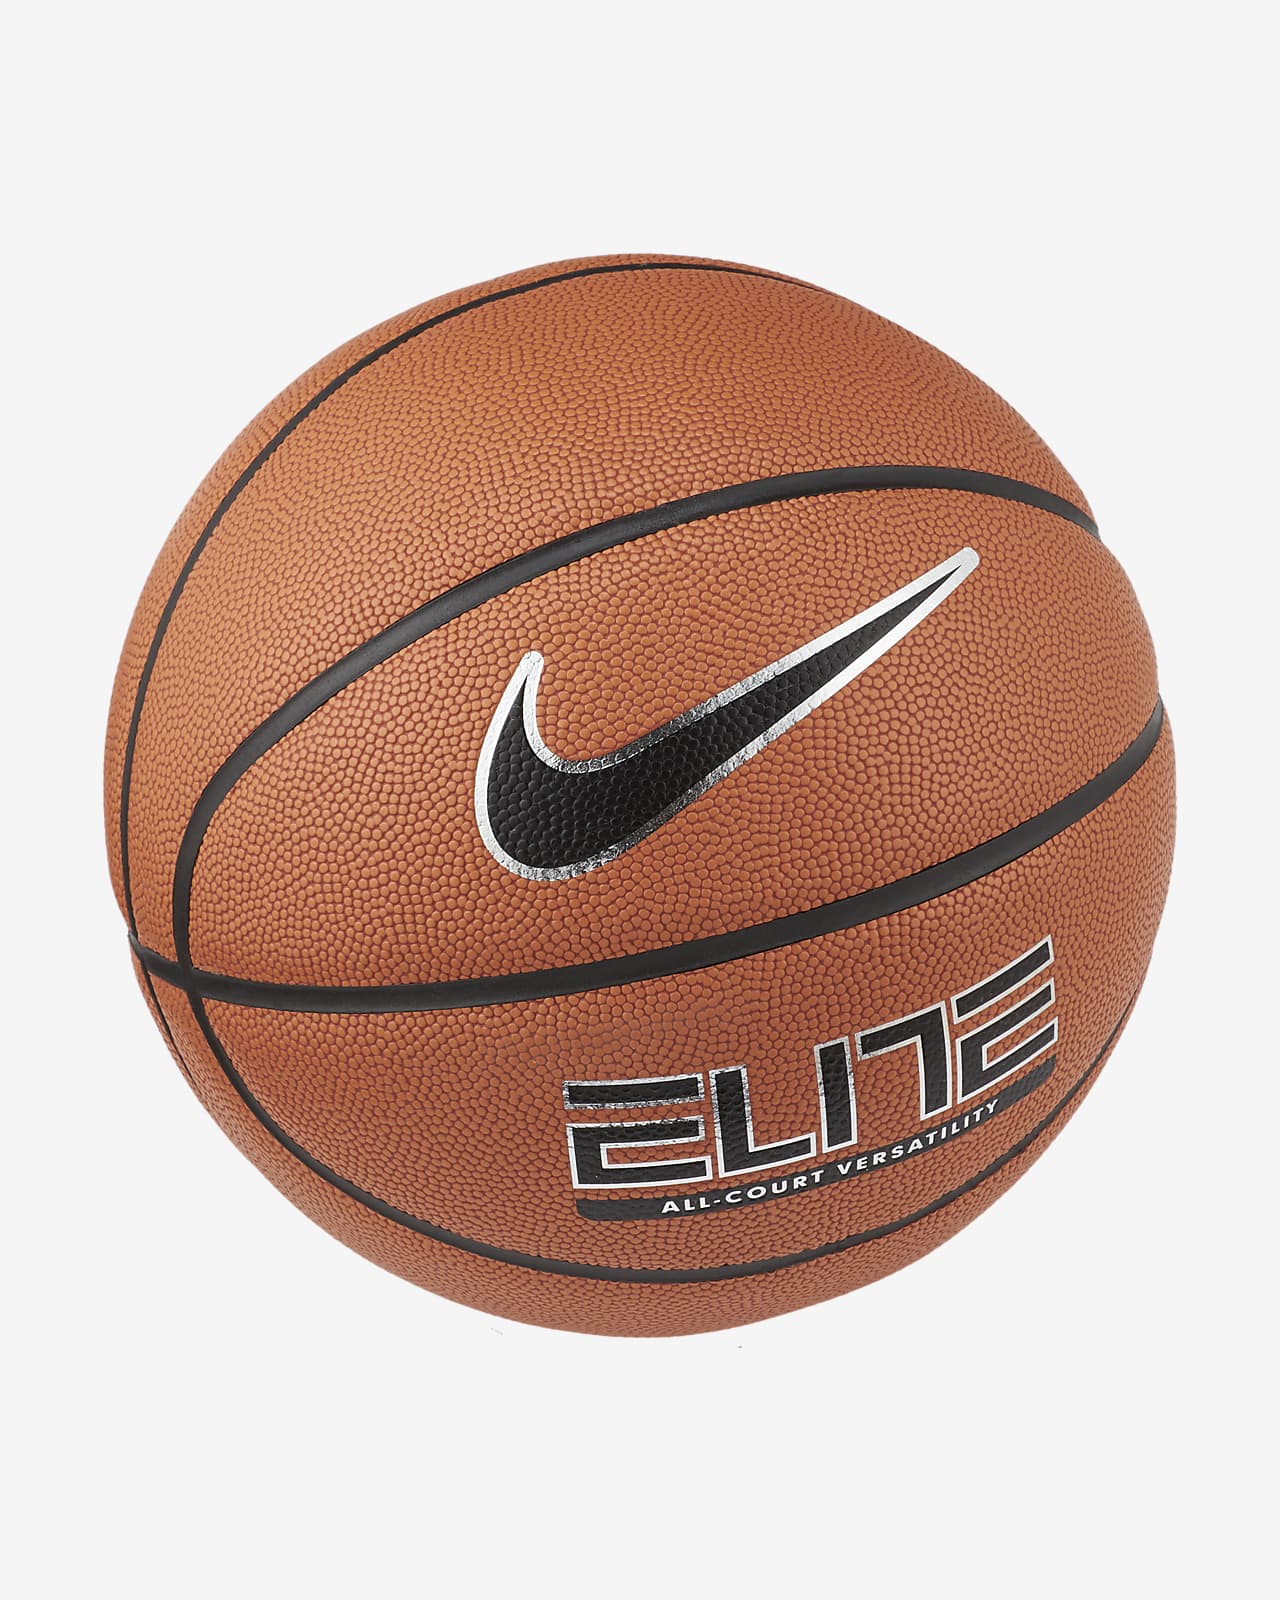 Nike Elite All-Court Basketball (Size 7 